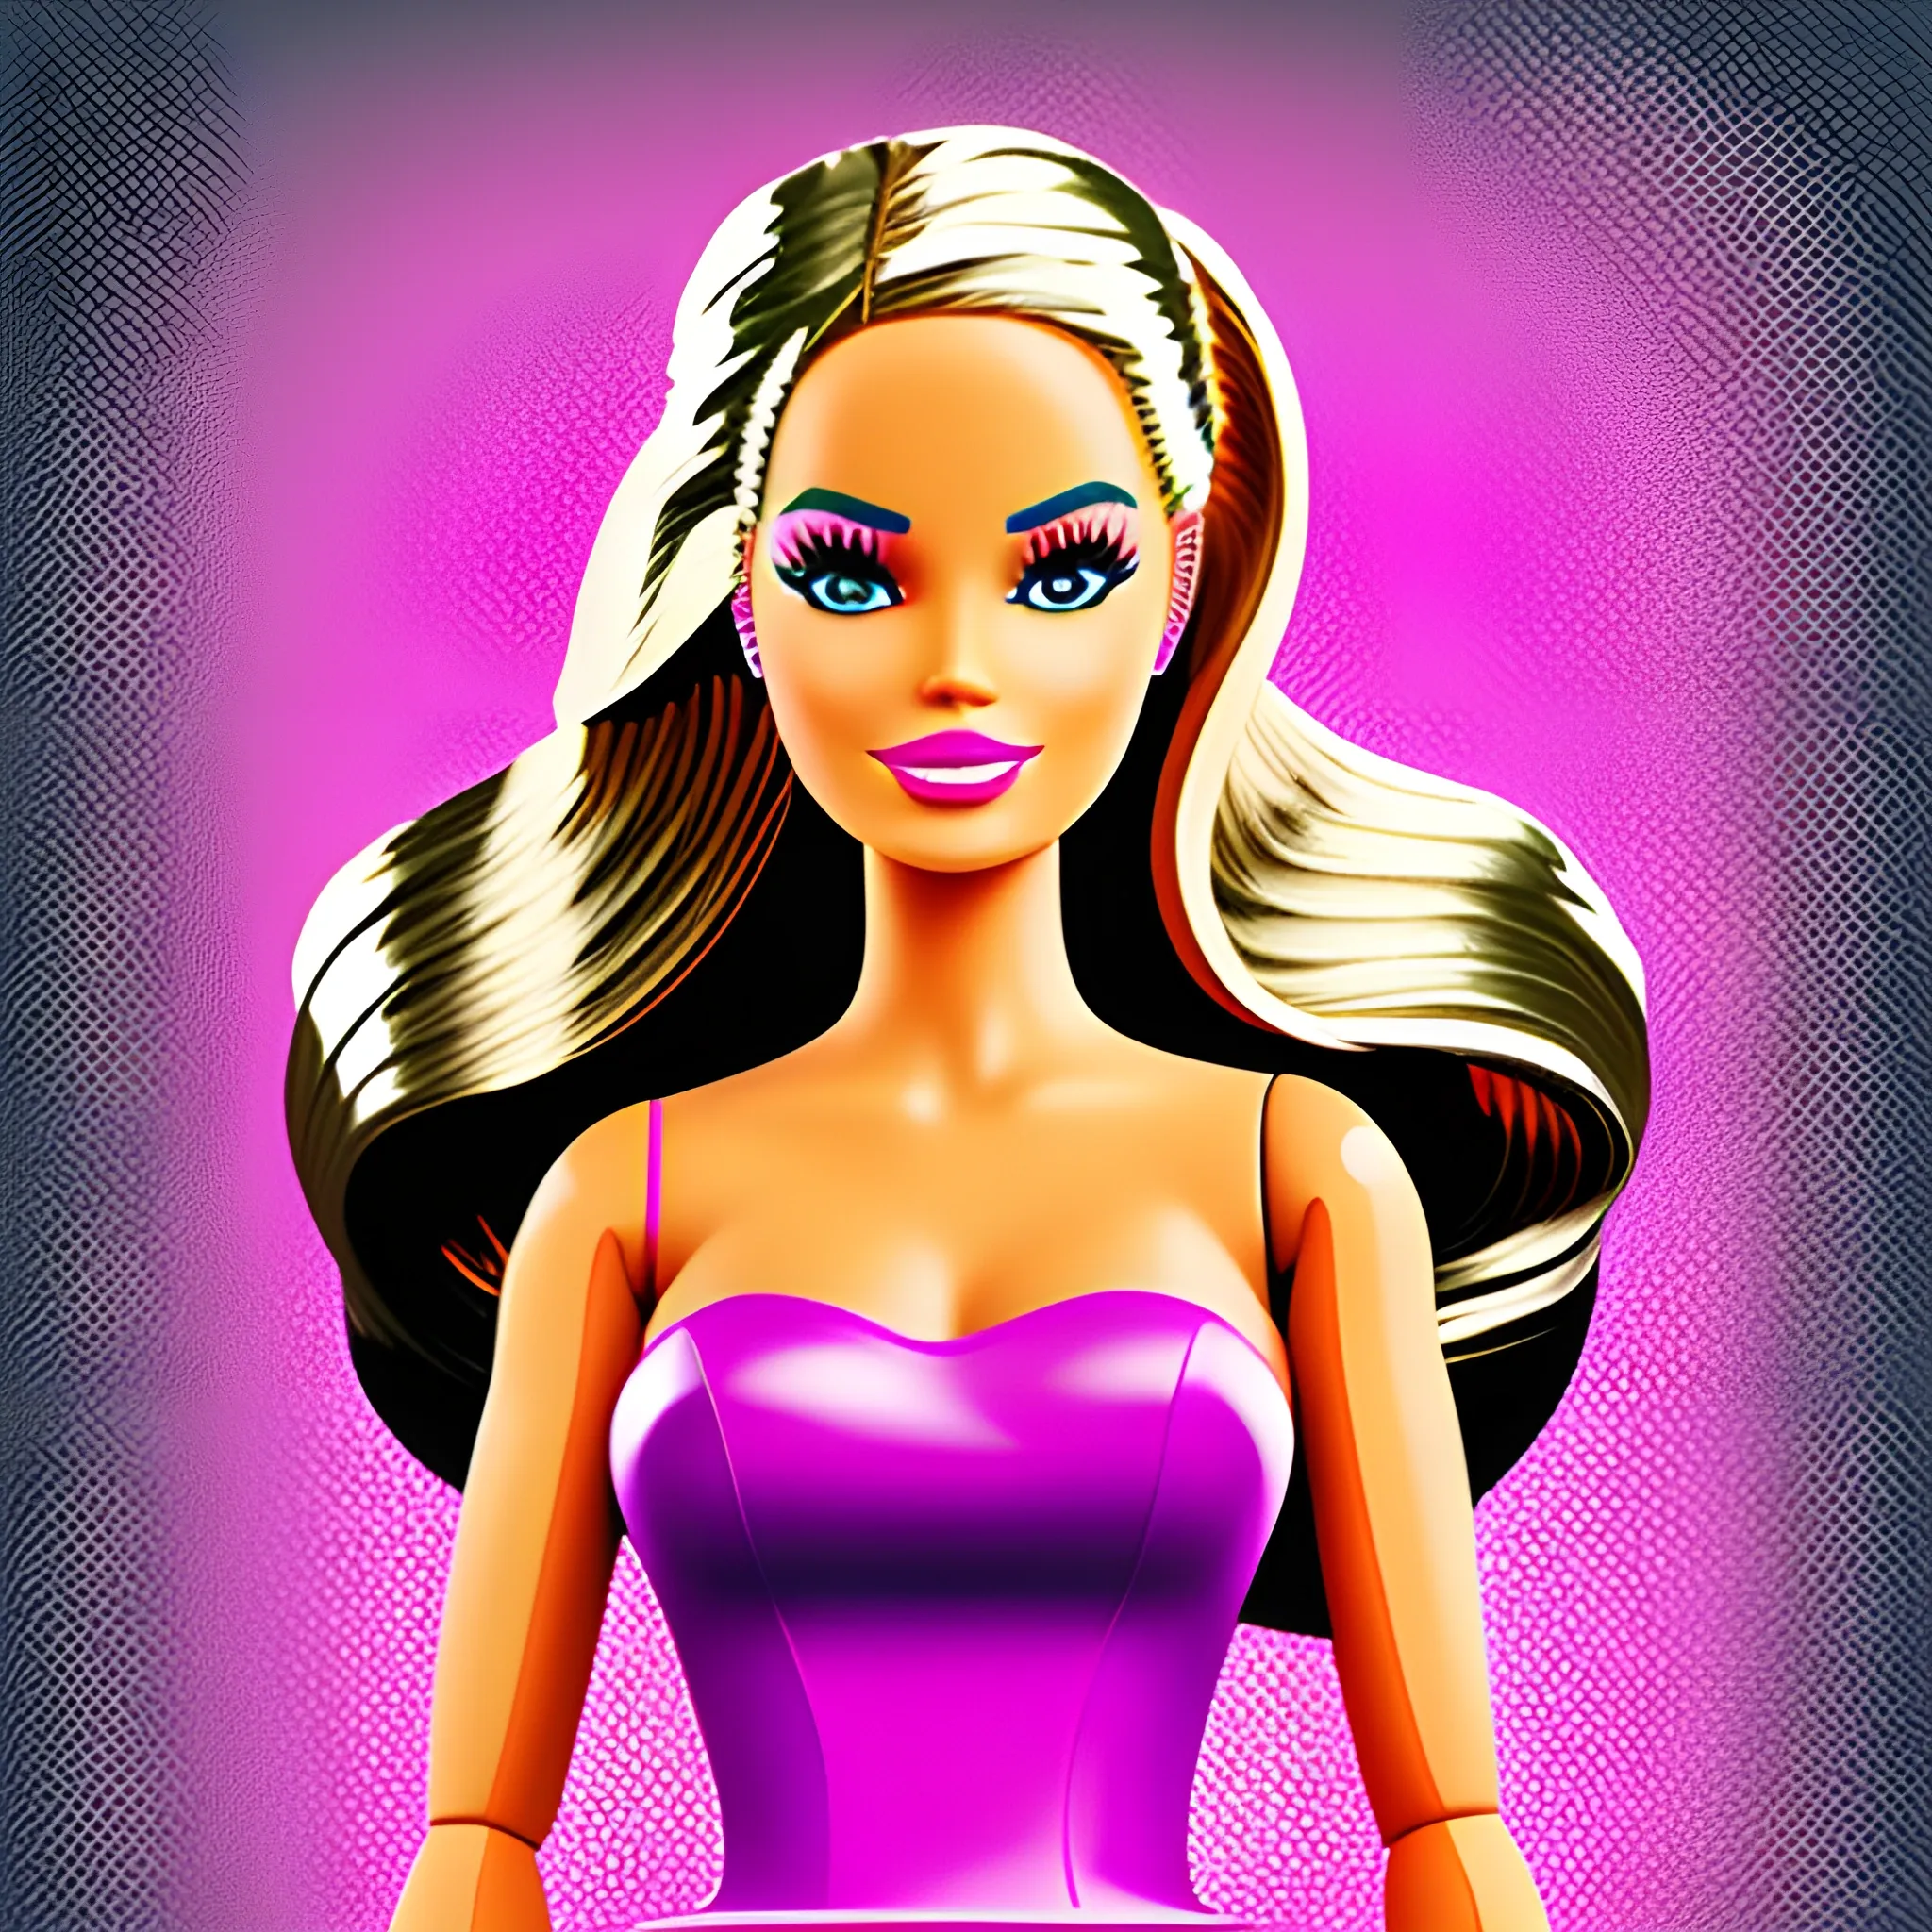 Barbie, smooth digital artwork, pop art,
